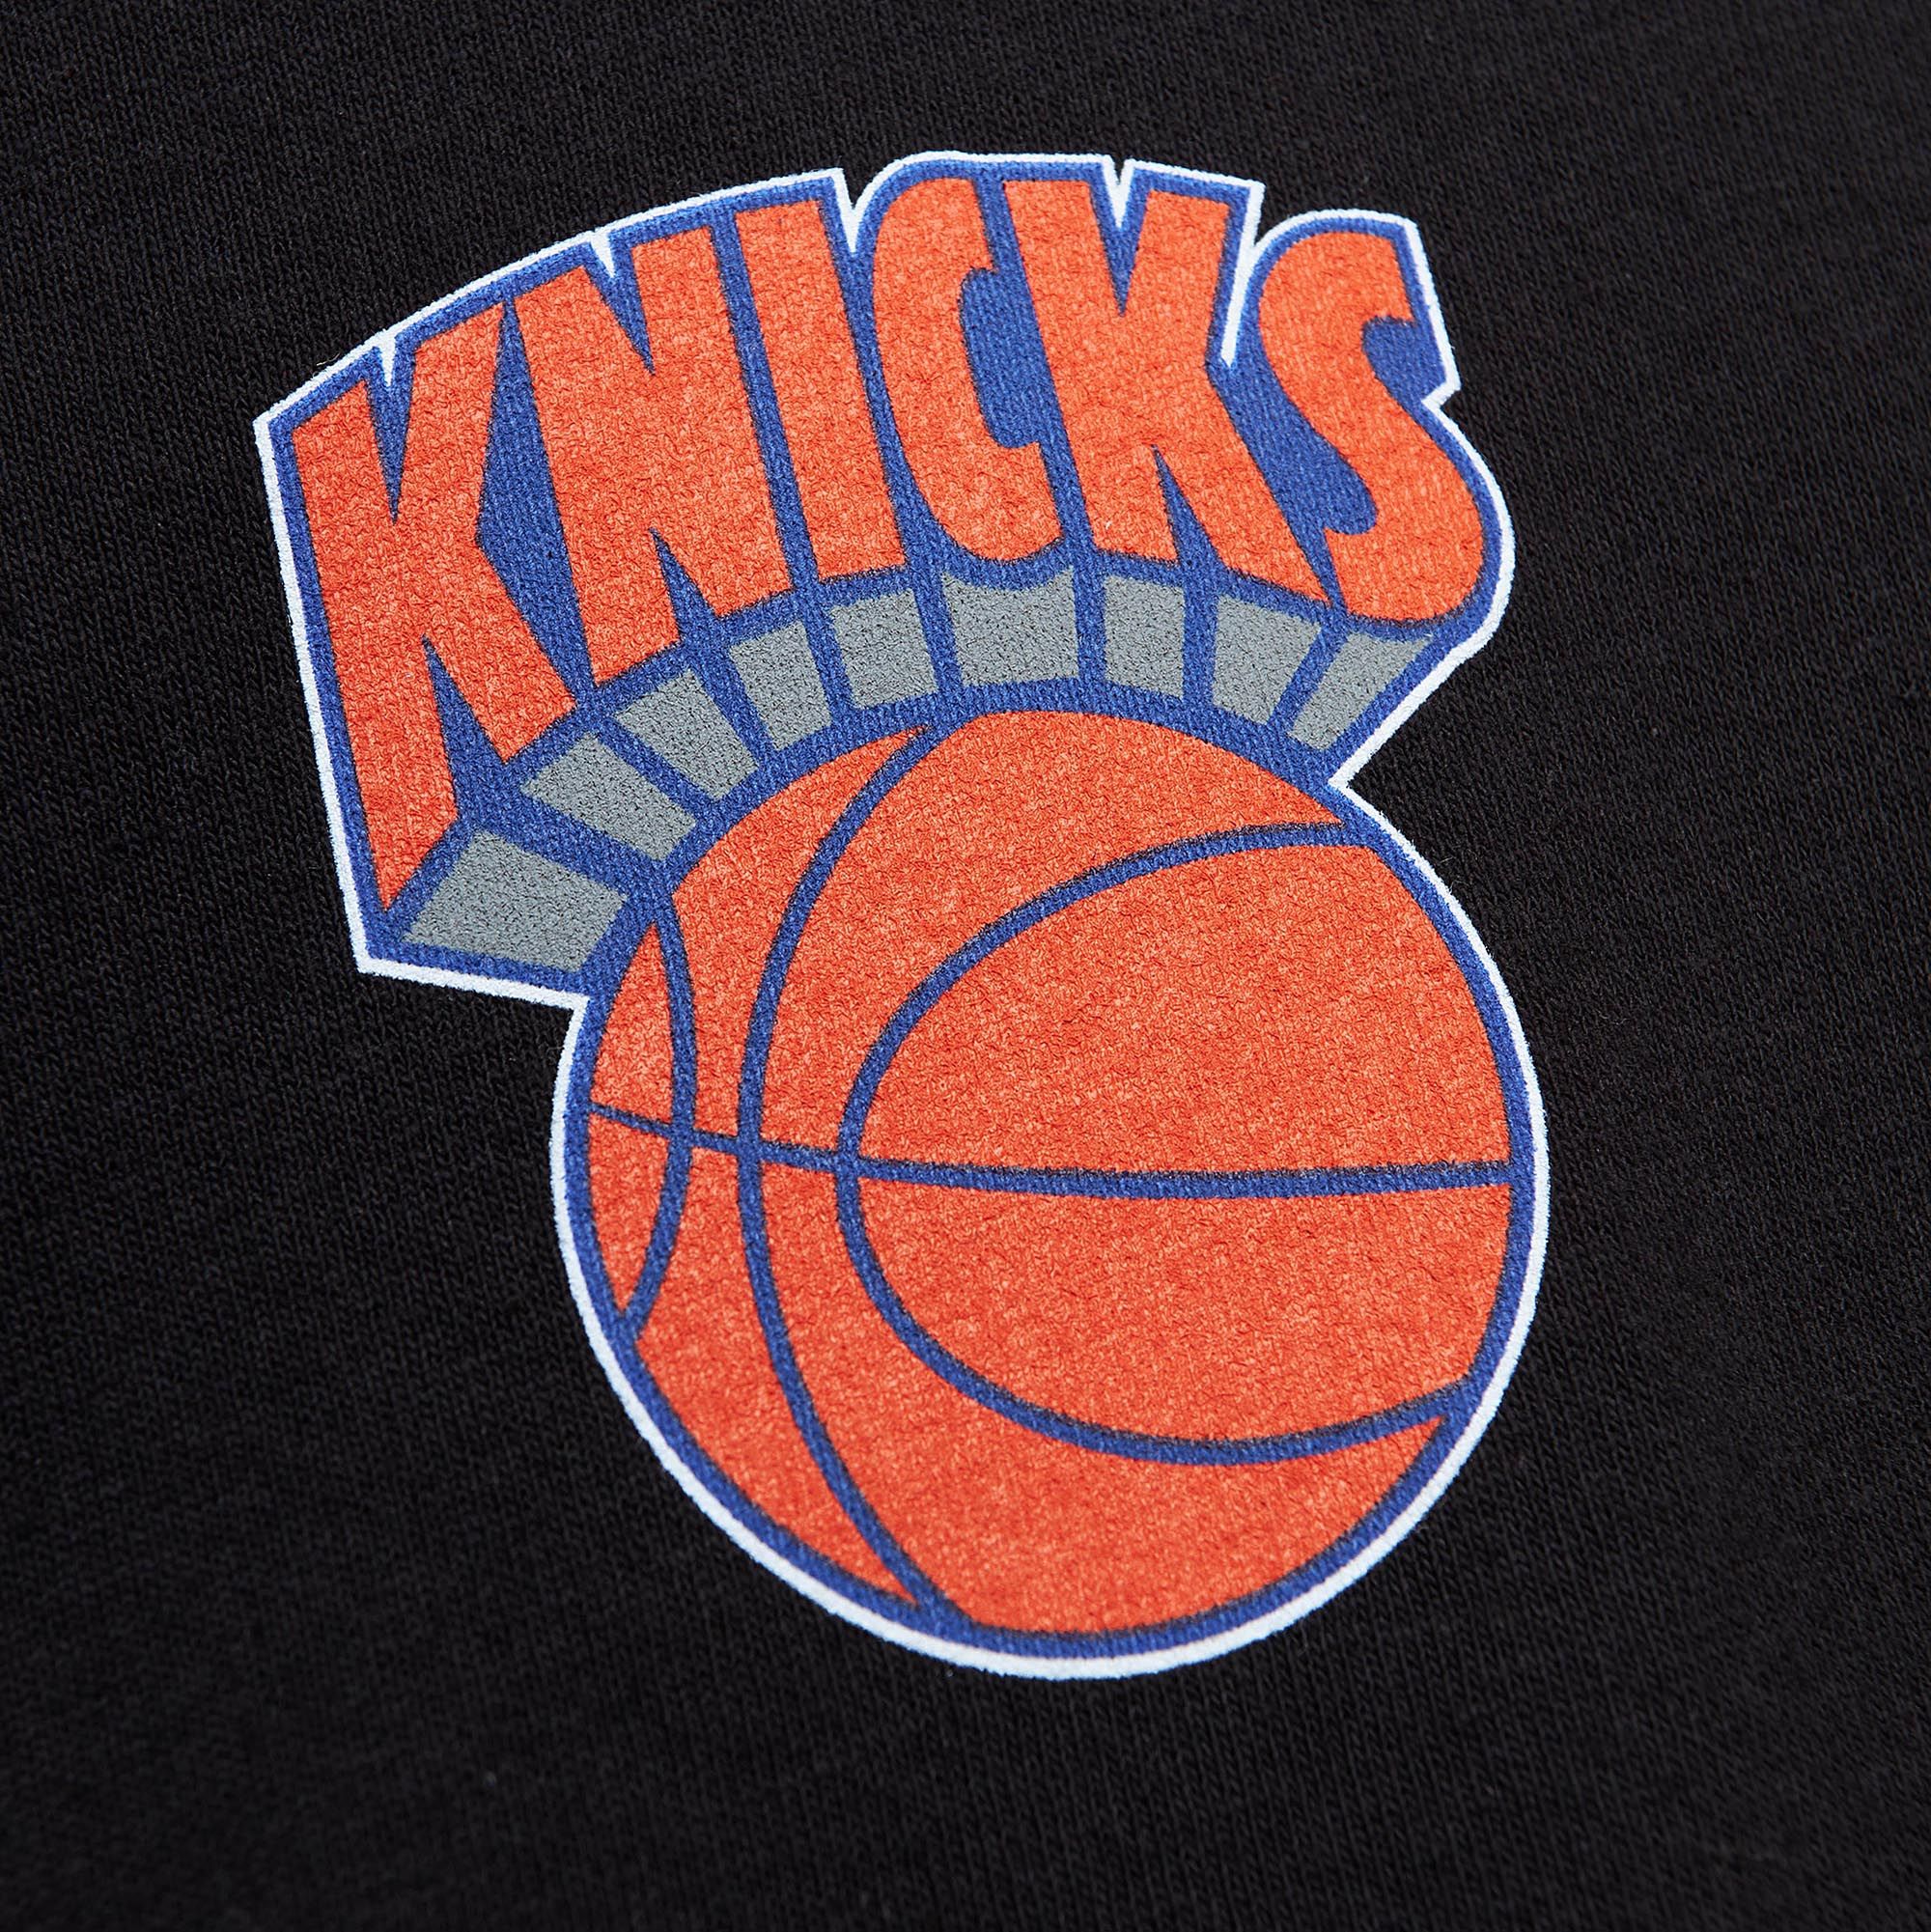 Suga x NBA Glitch Tee New York Knicks